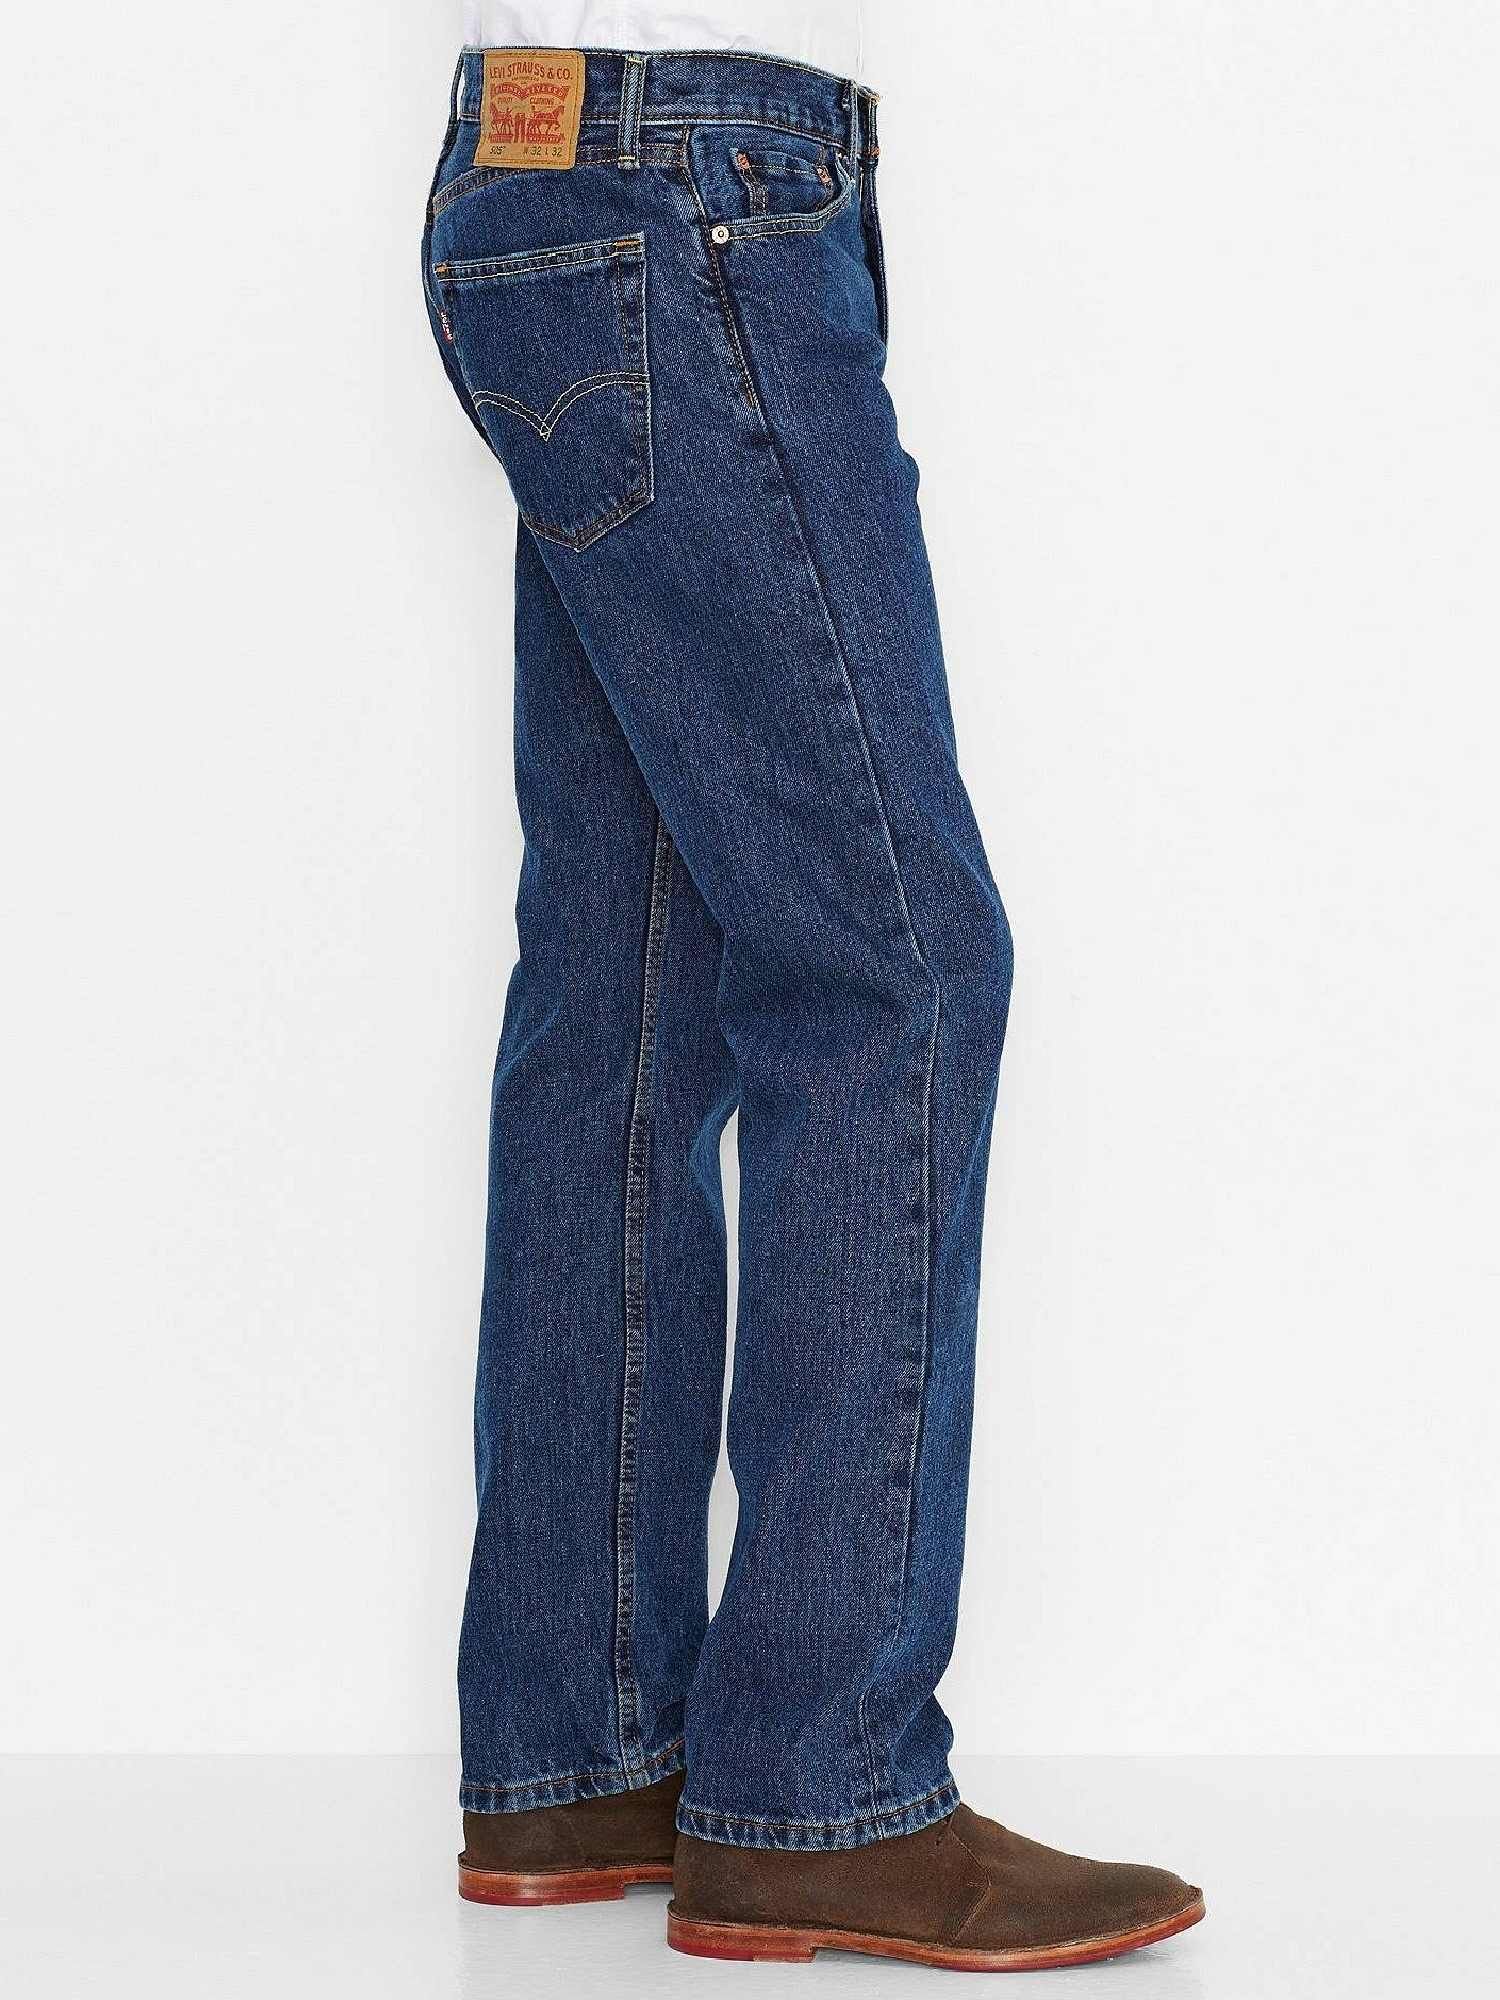 505 blue jeans